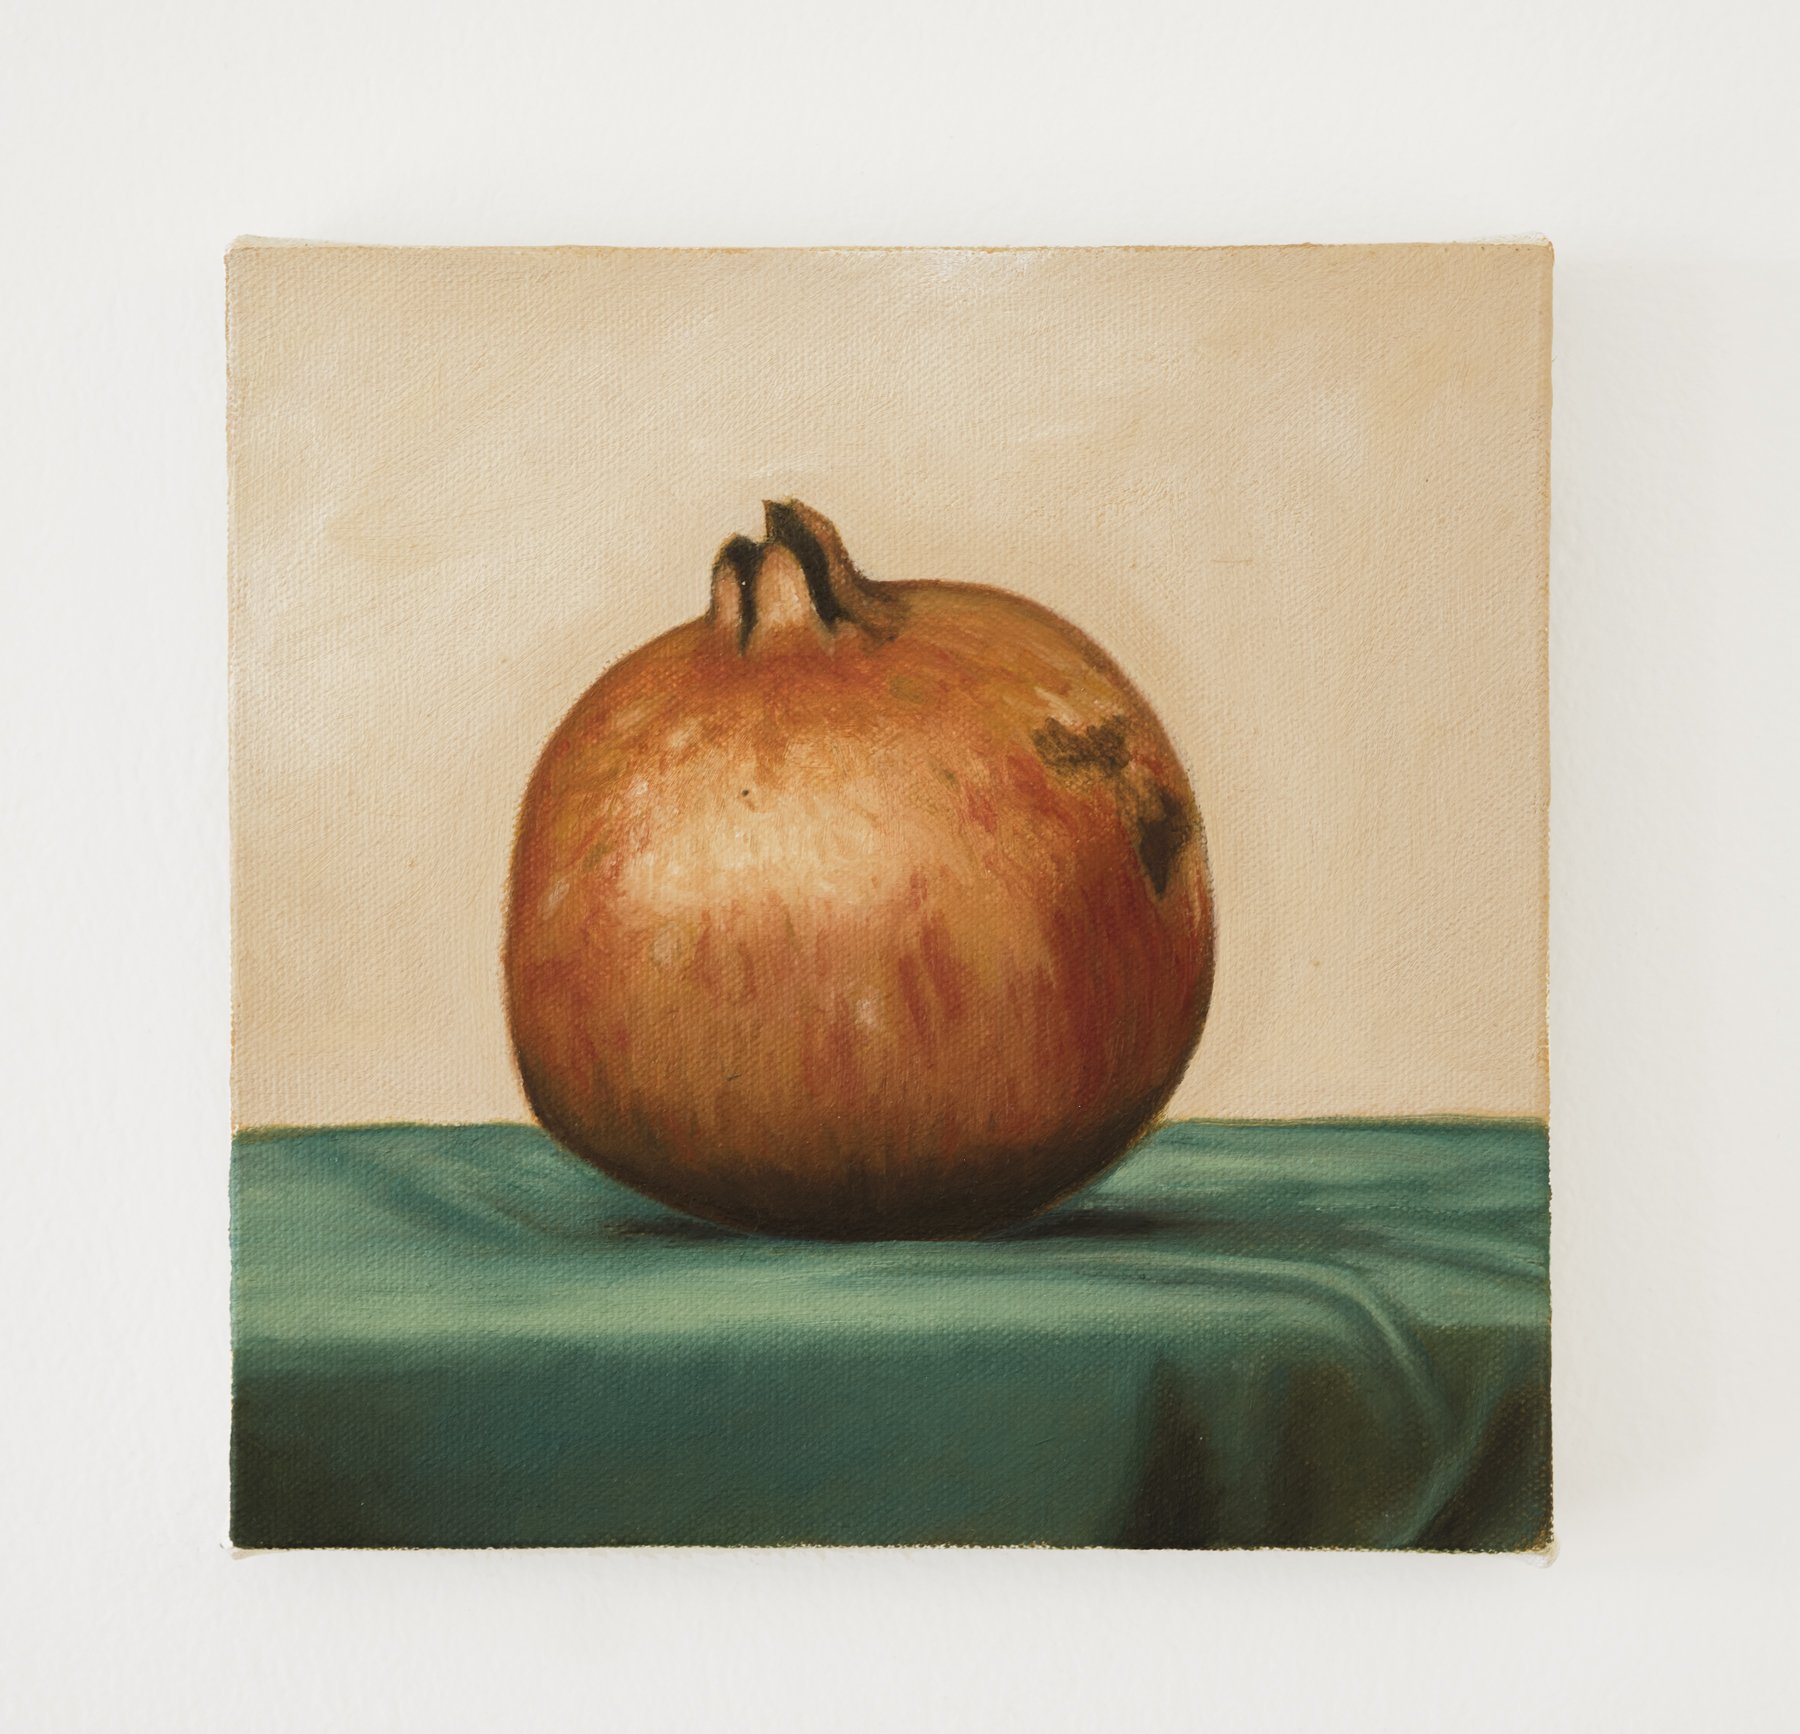 Pomegranate, 2020. Oil on canvas. 7.5 x 7.5"